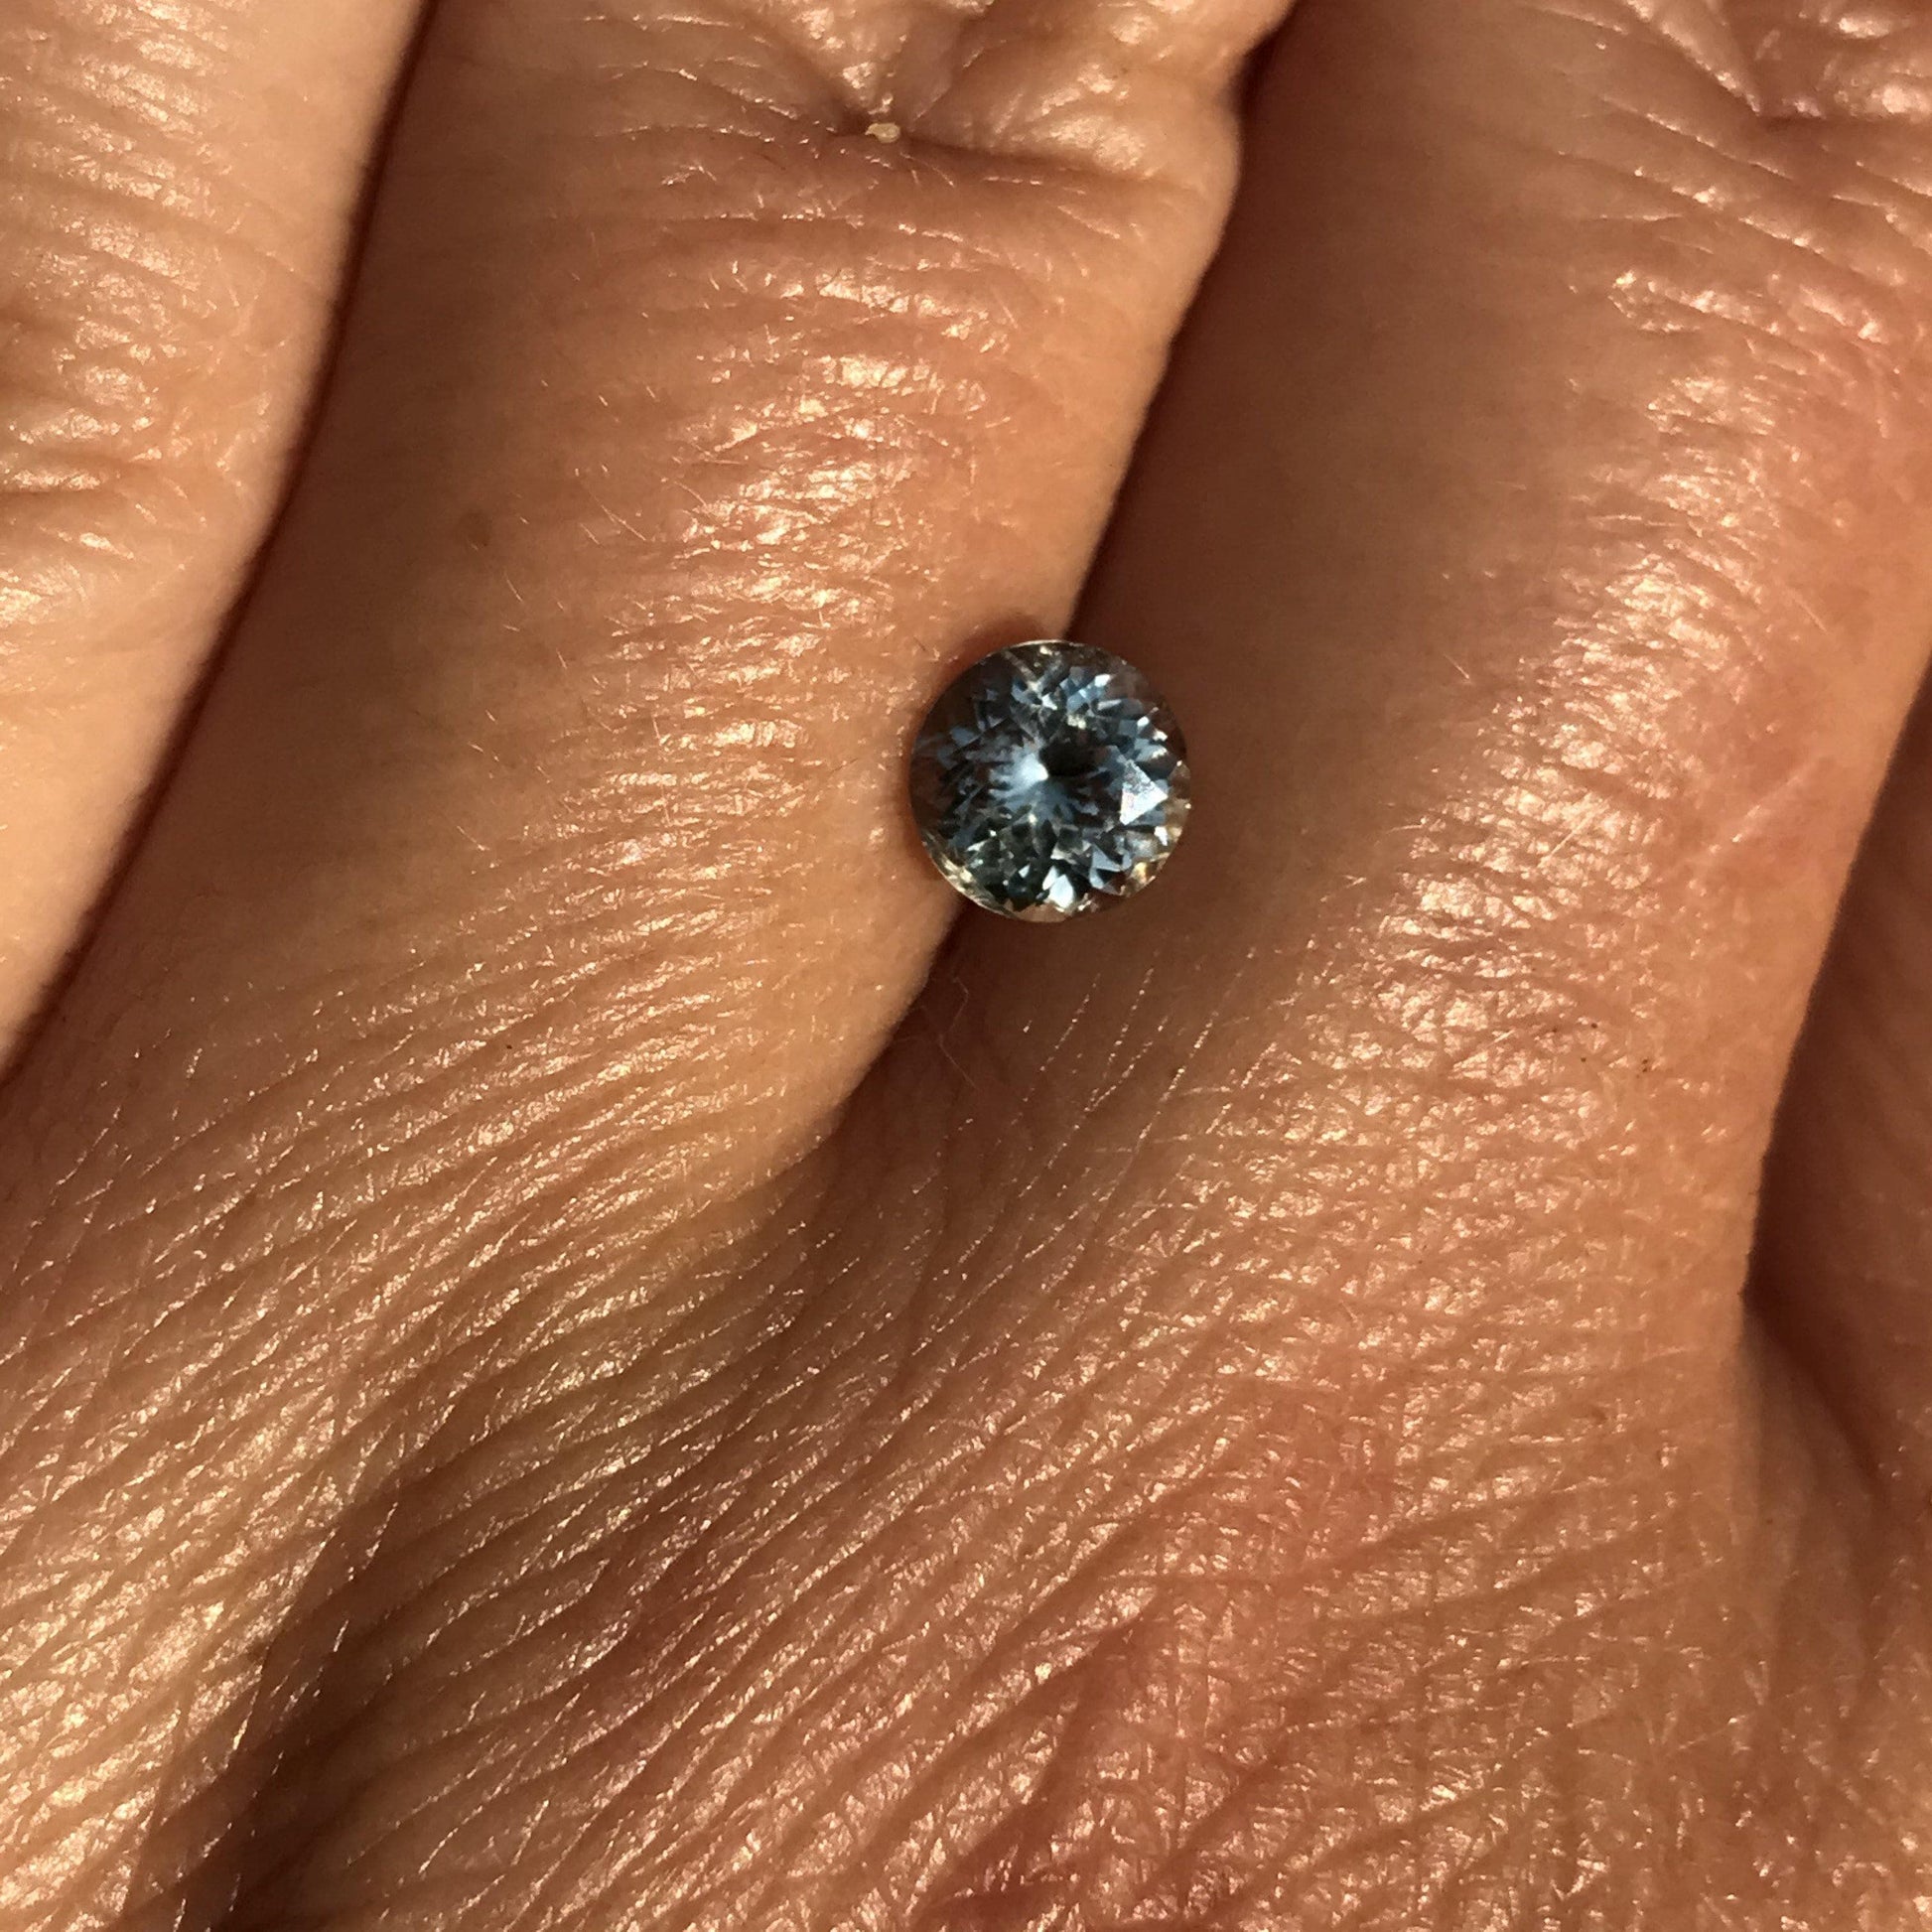 Round Blue 5mm/0.6ct Malawi Sapphire B2 Fair Trade Loose Gemstone